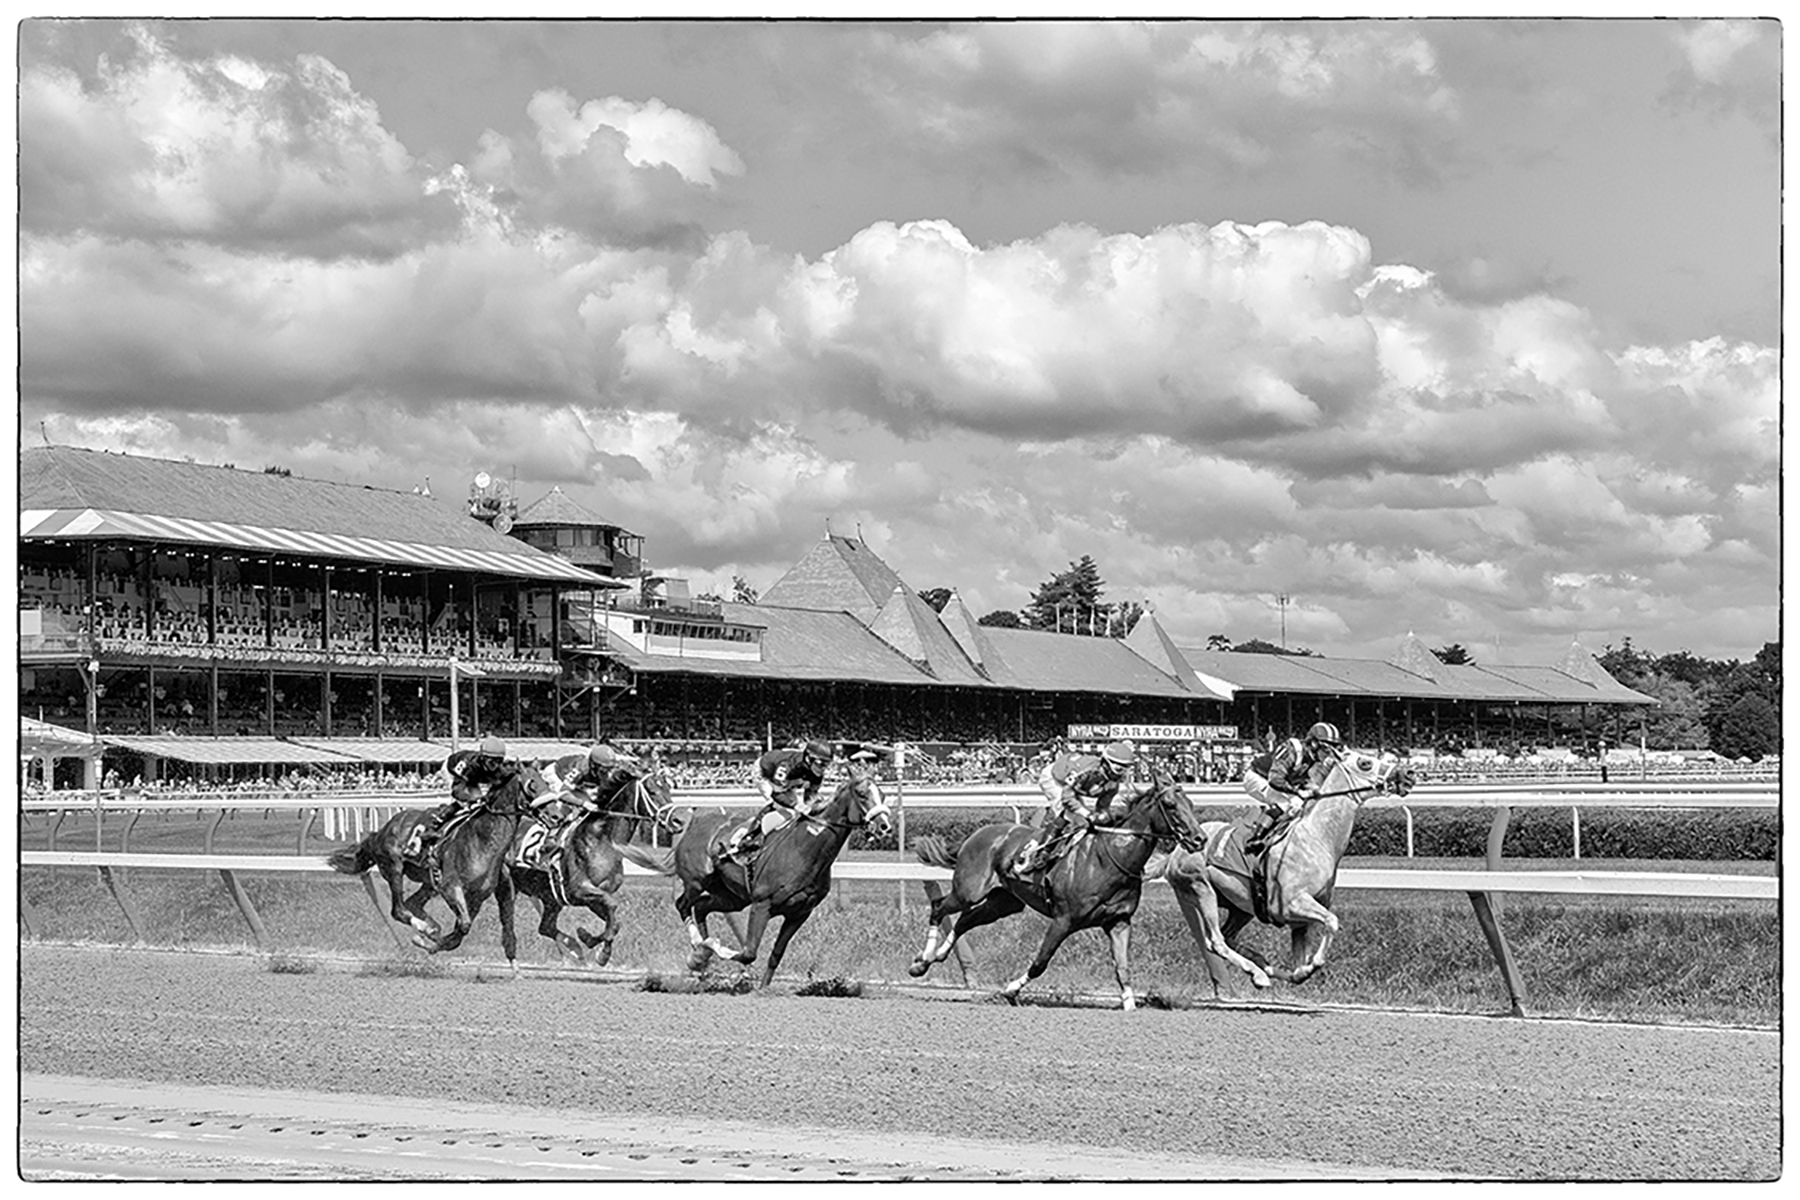 "The Club House Turn" (August 18, 2018 - Saratoga Race Course), Michael Gallitelli